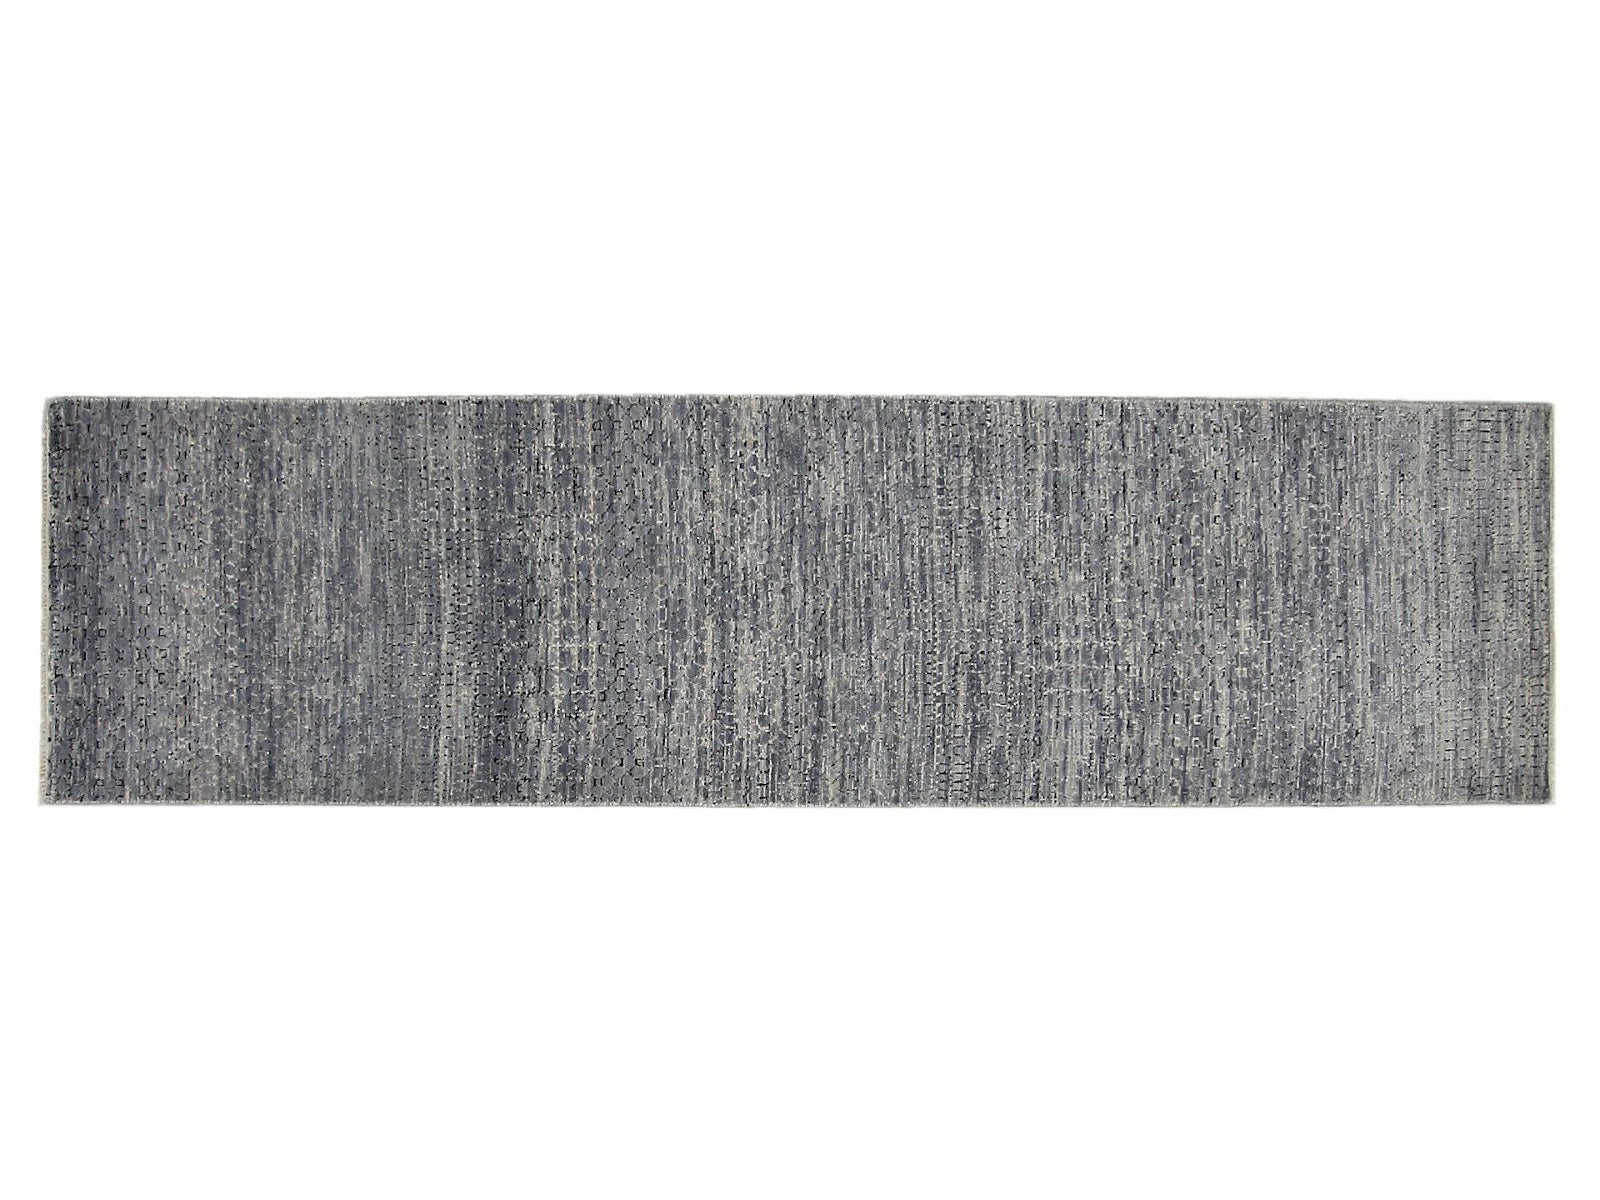 Minimalist transitional wool runner rug in gray, perfect for modern hallways